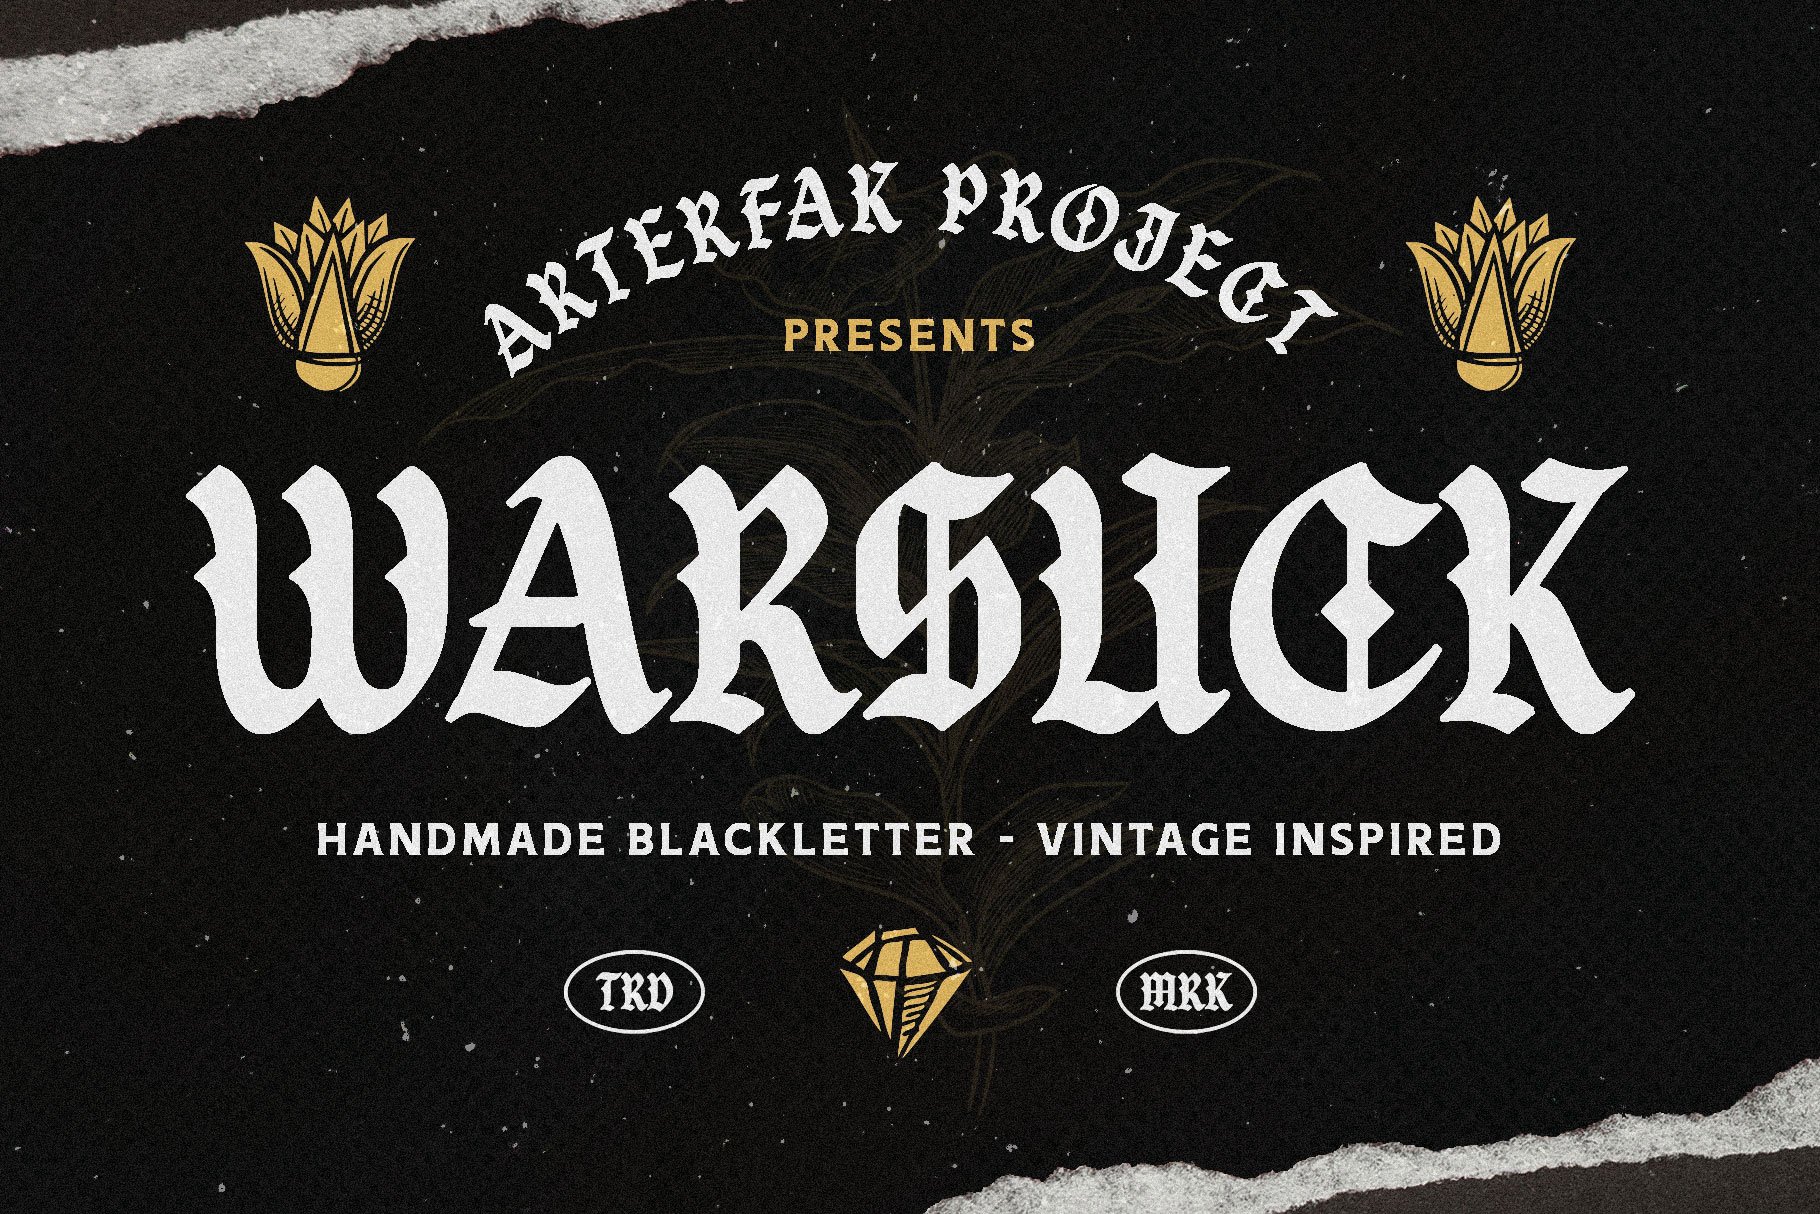 Warsuck - Hand Drawn Blackletter cover image.